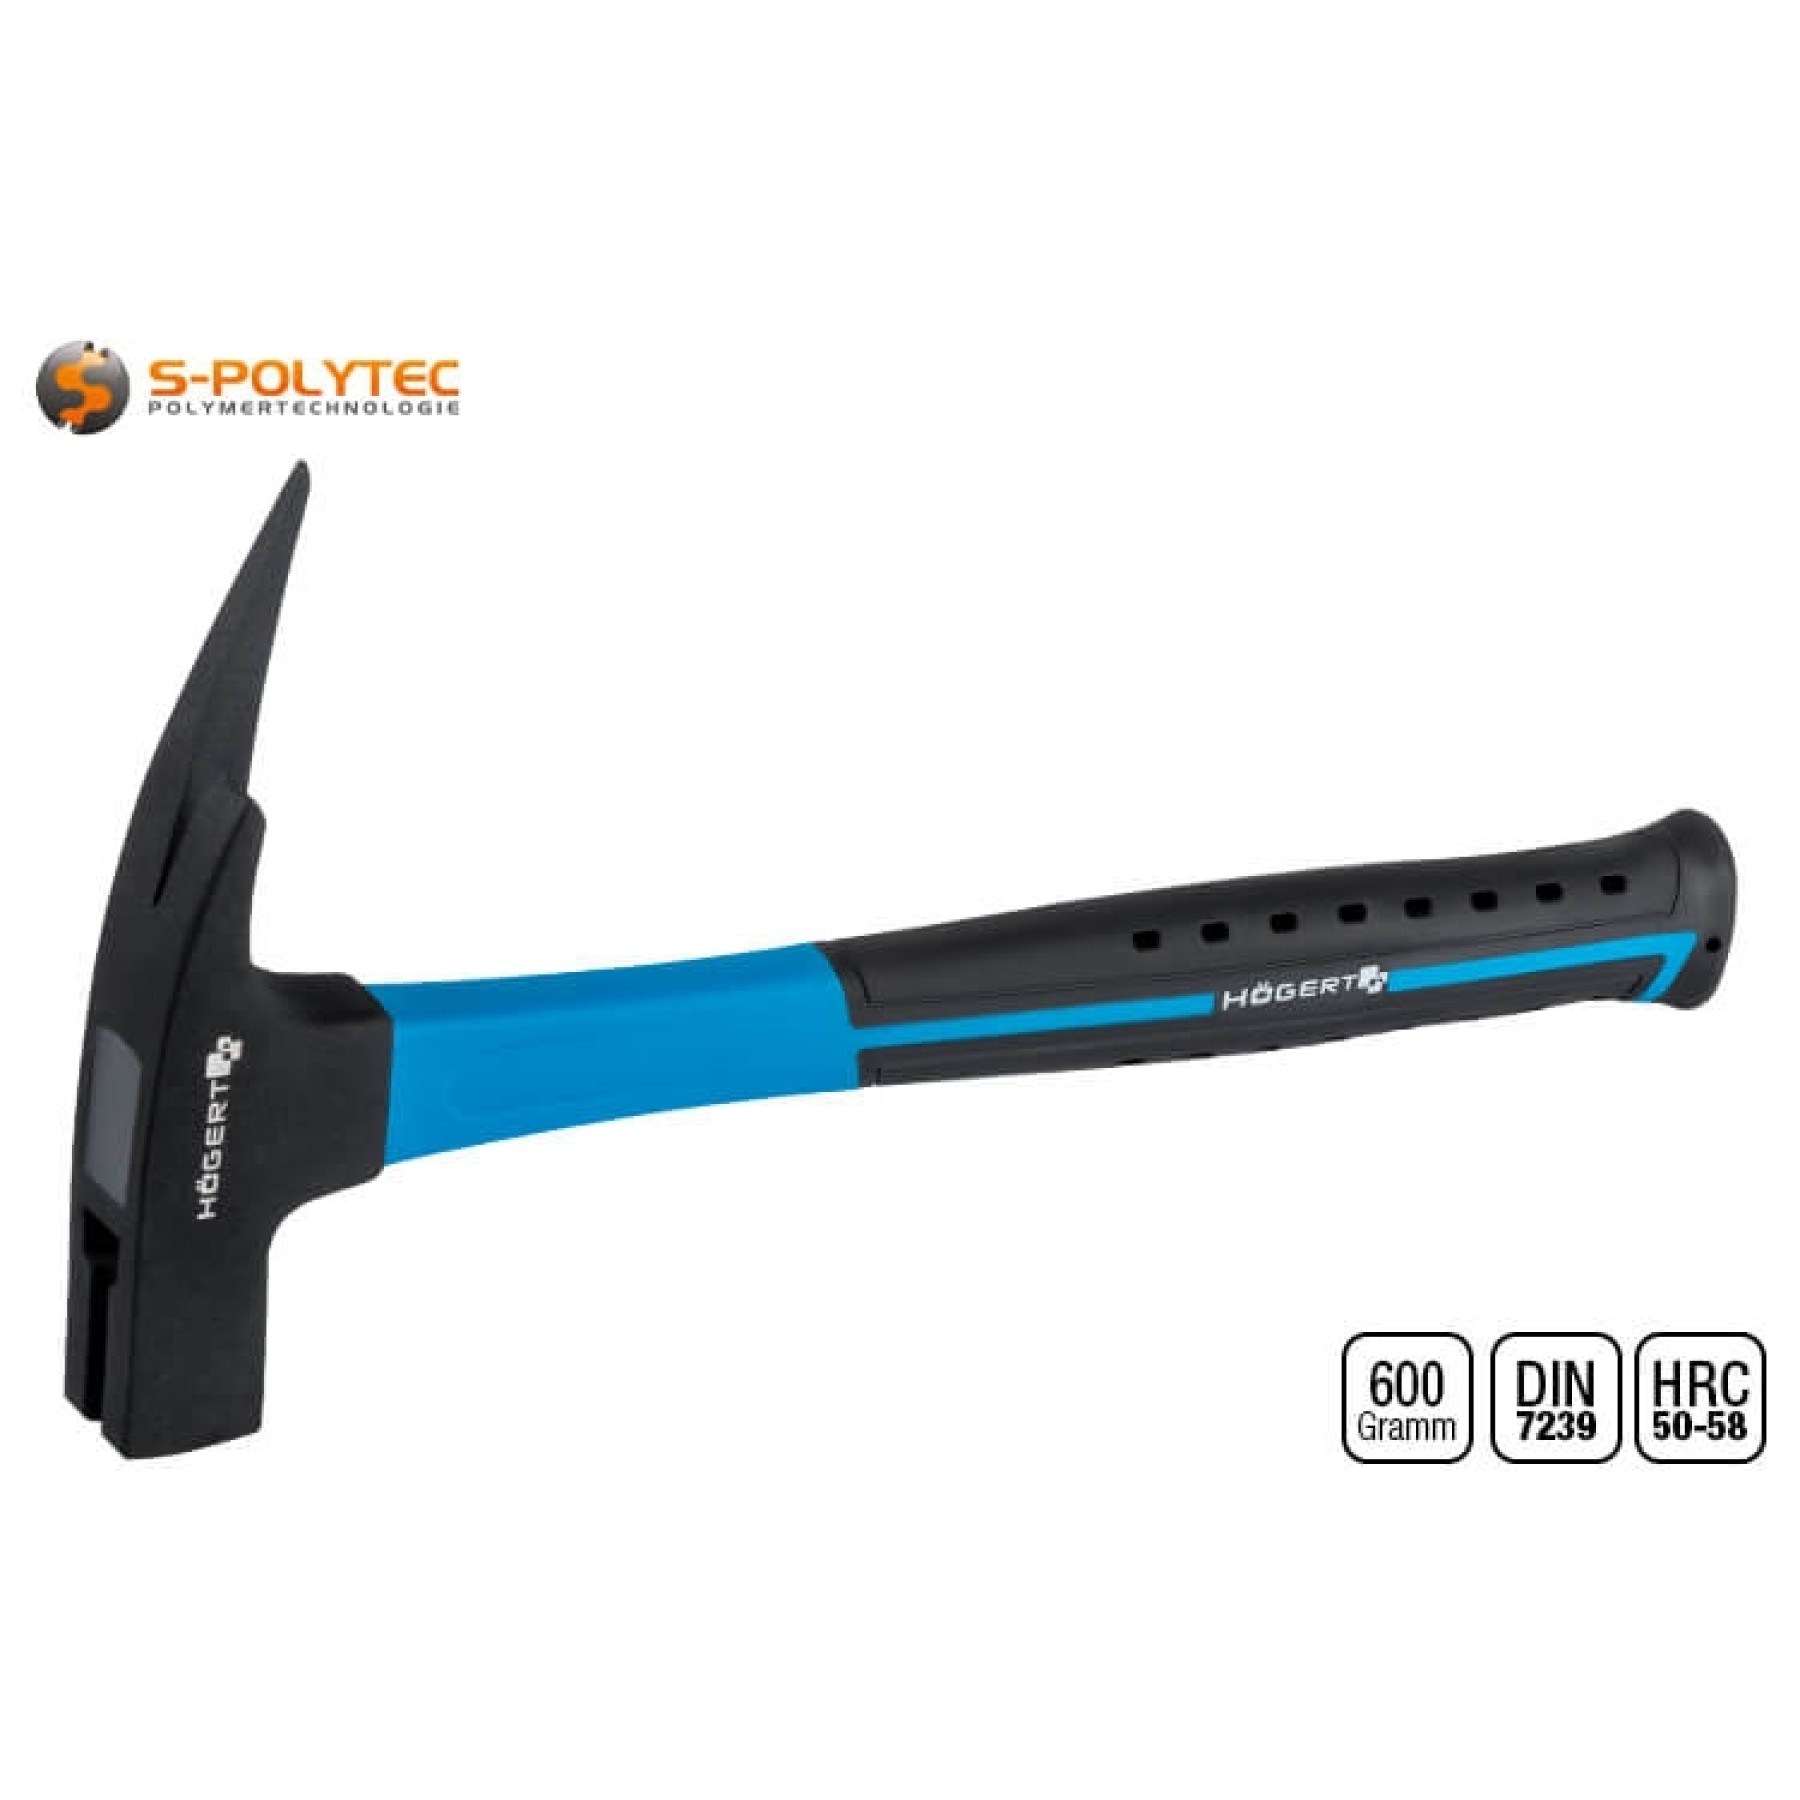 The batten hammer with vibration-damping fibreglass handle has an ergonomic, non-slip grip